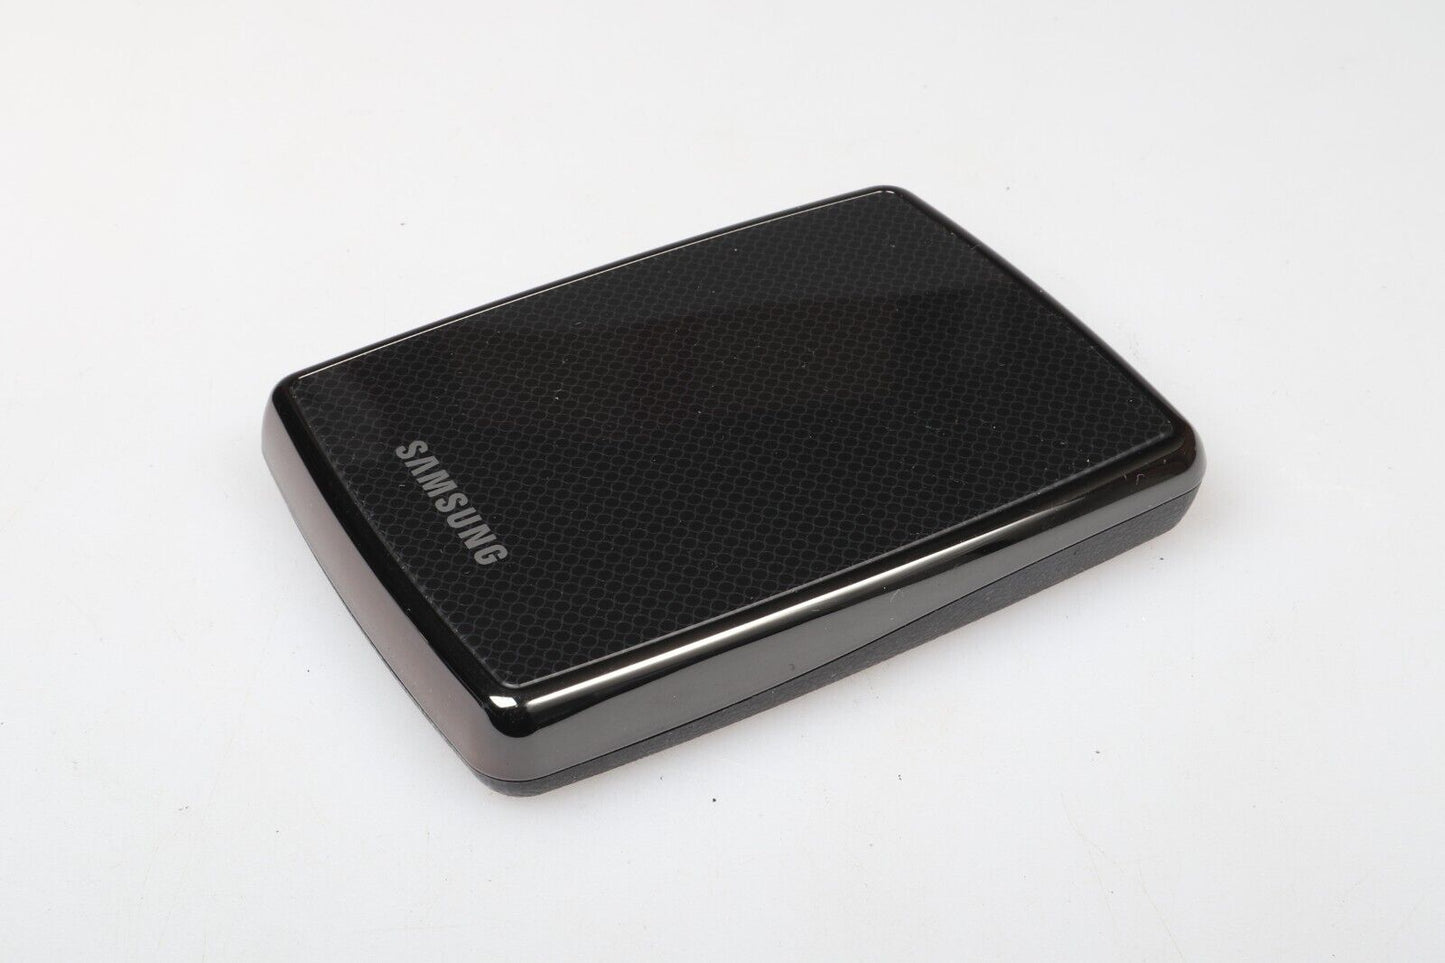 Samsung S2 Portable 320GB | External Hard Drive